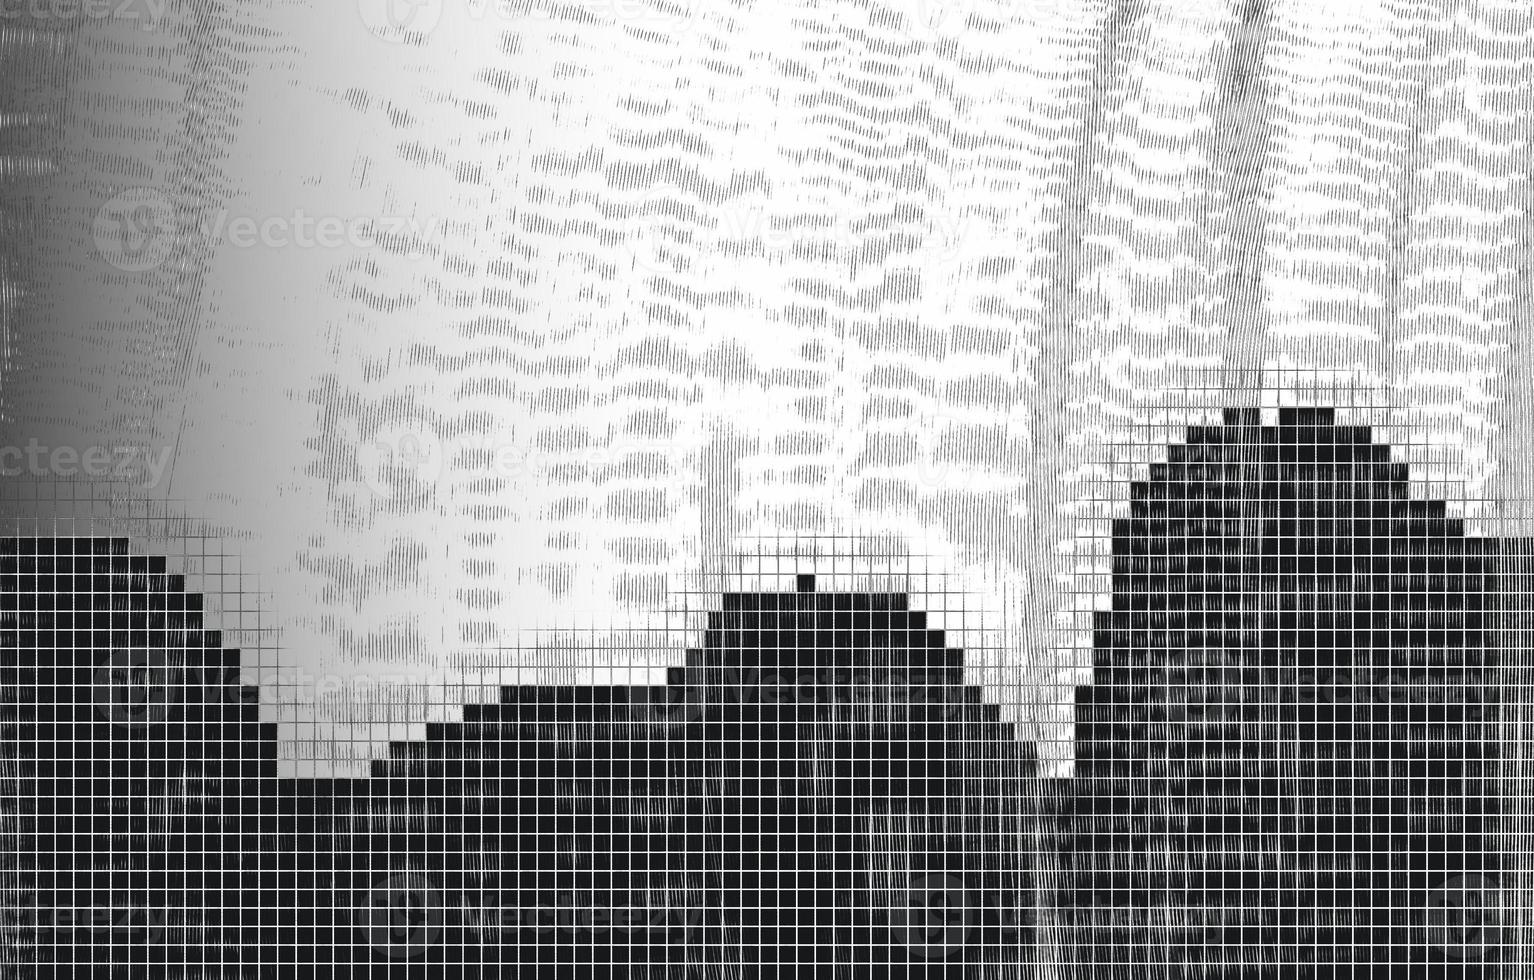 grunge muro bianco e nero background.abstract bianco e nero grintoso grunge background.black e bianco ruvido sfondo vintage distress foto